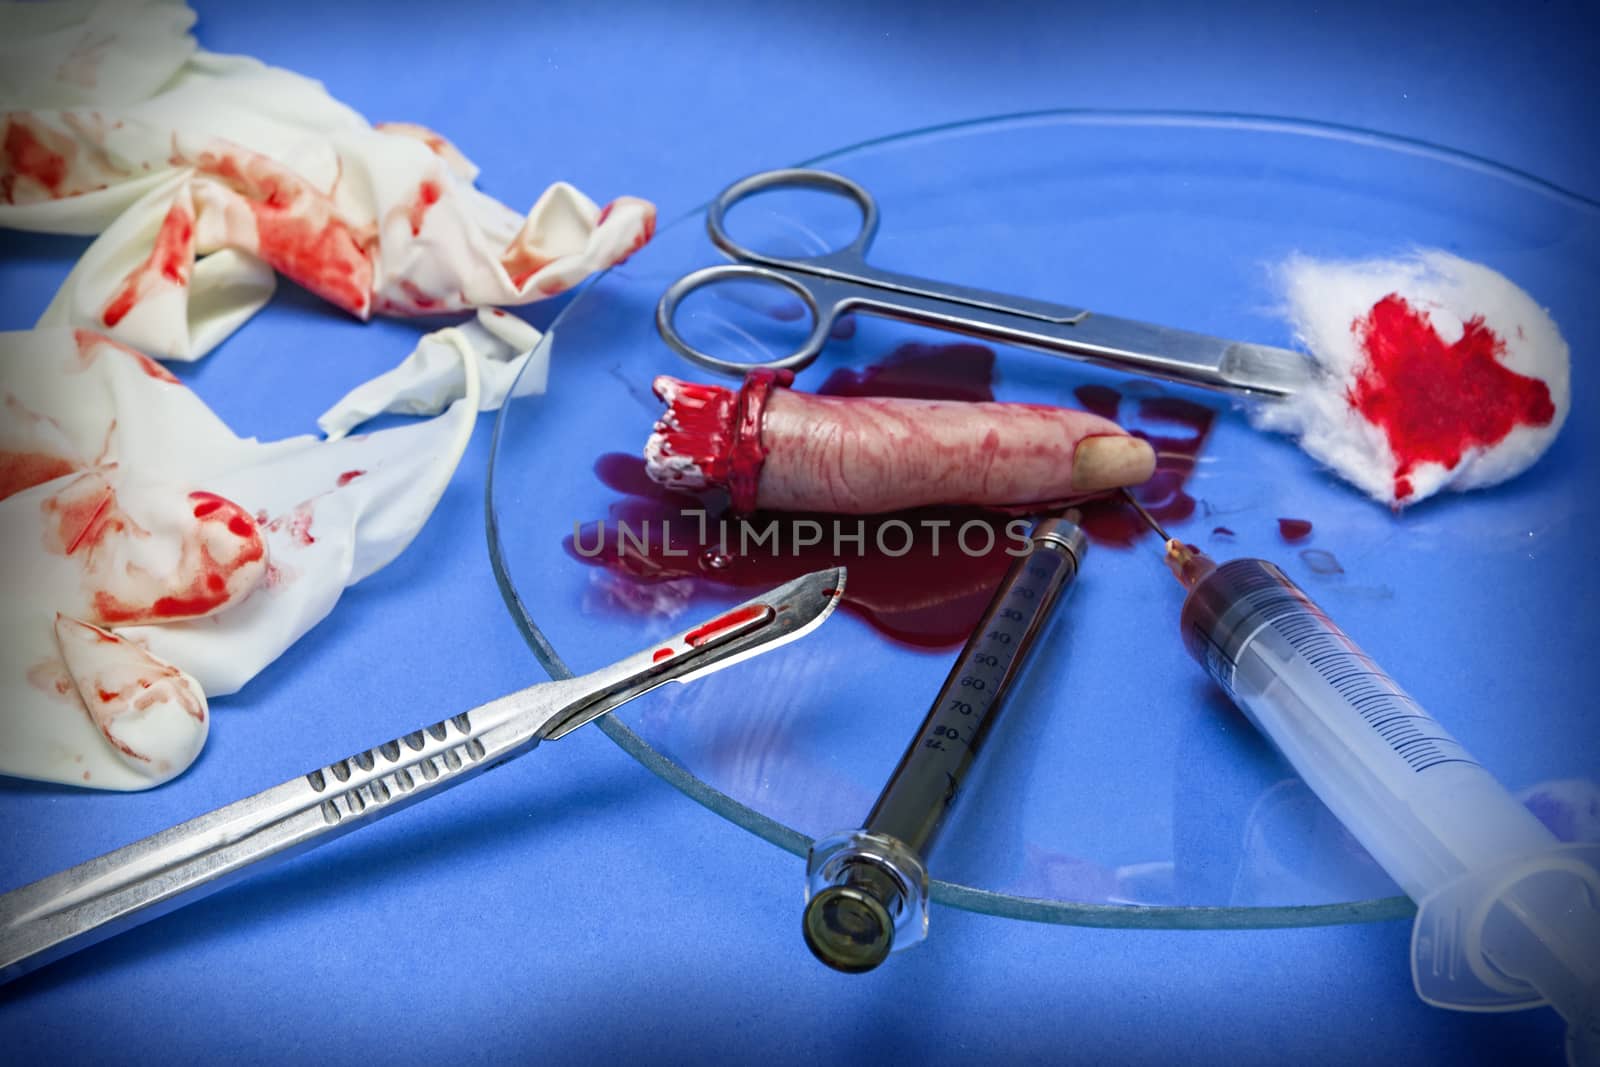 transplant of index finger, instruments during a surgical procedure